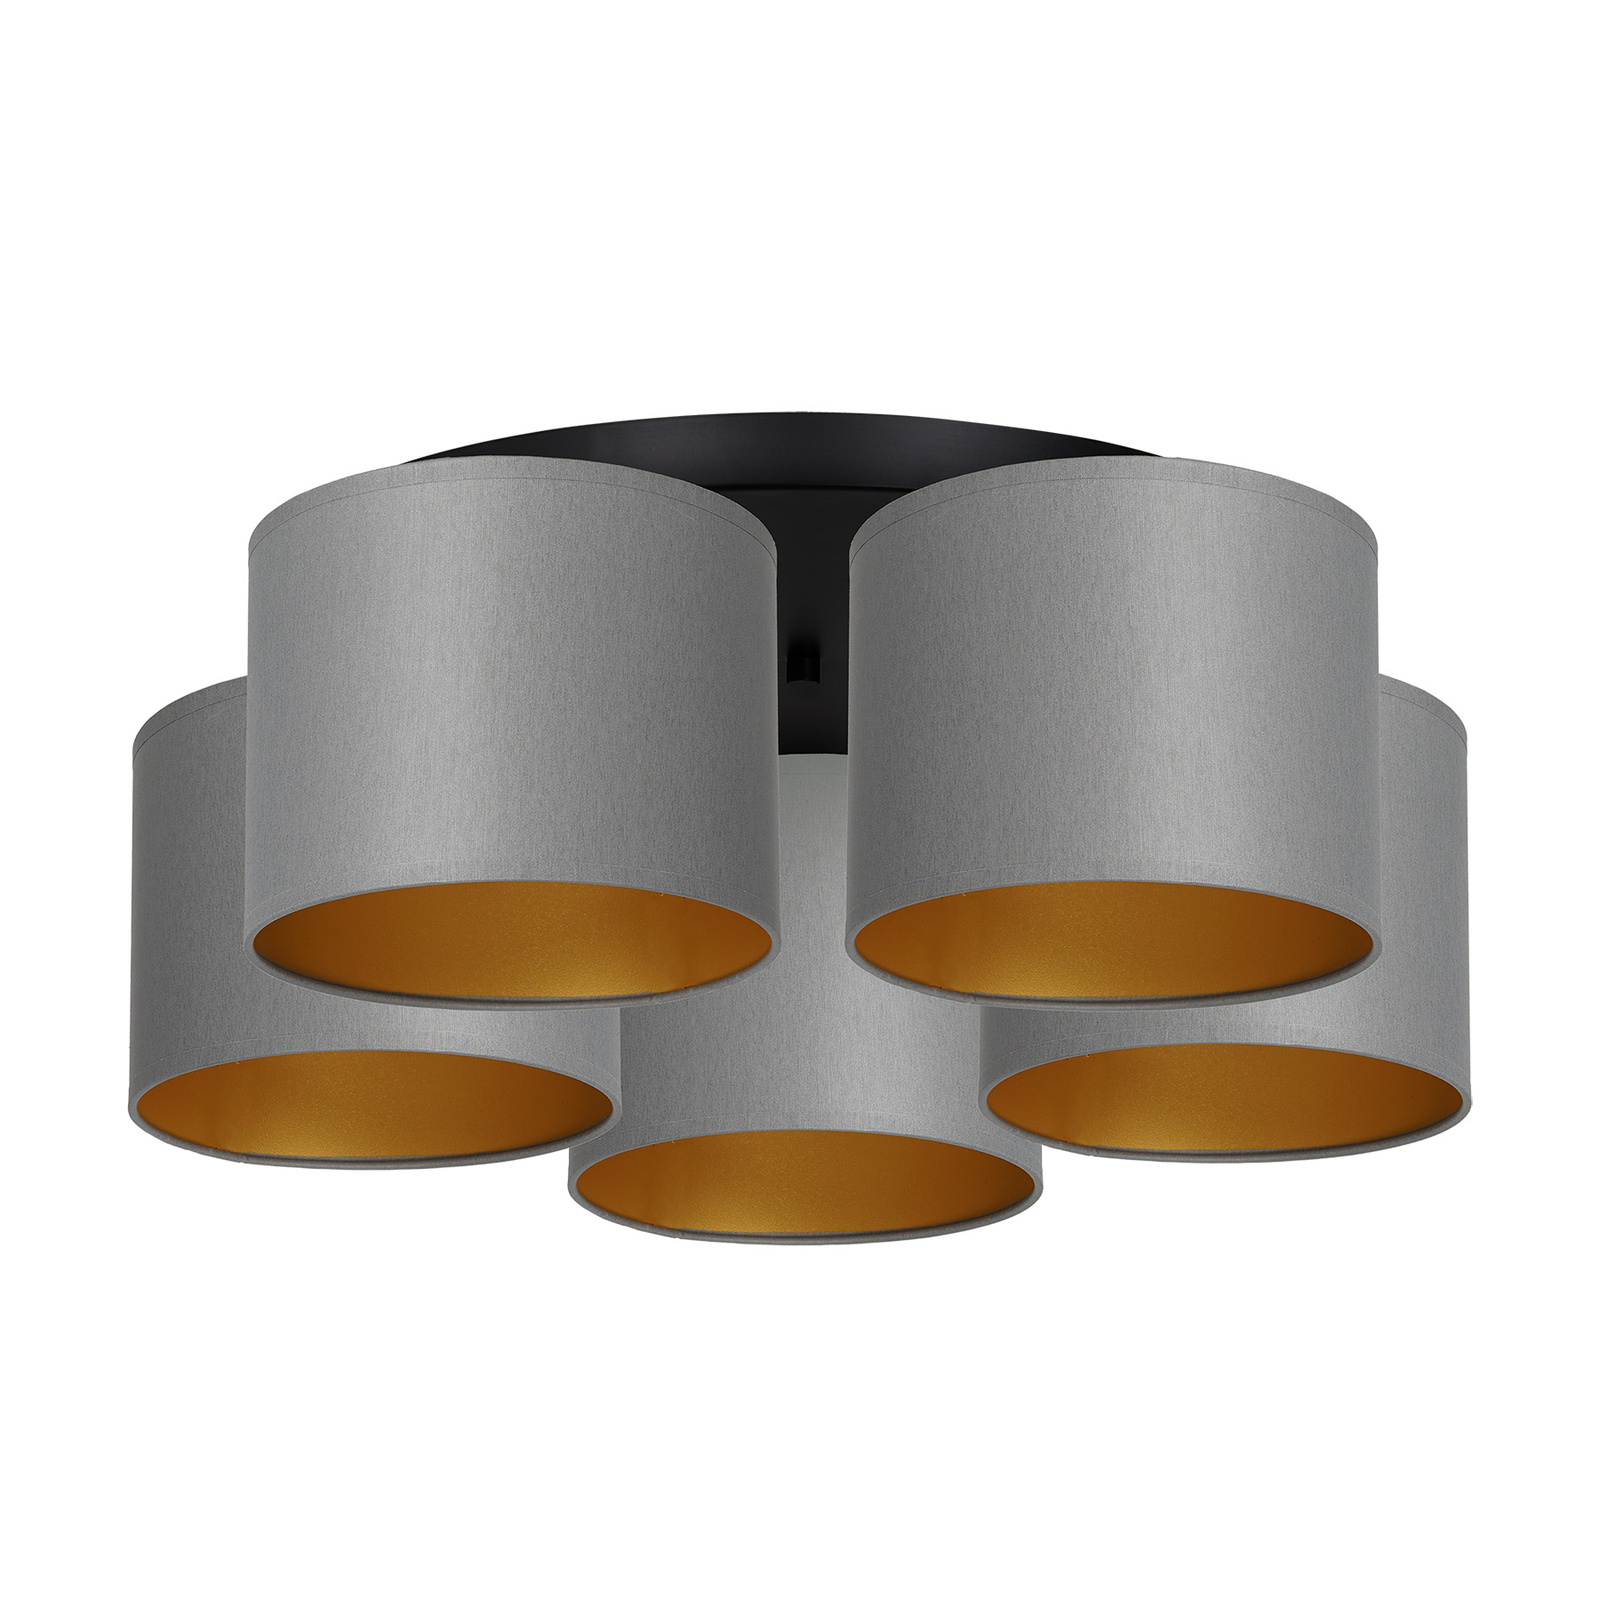 Soho ceiling light, cylindrical, 5-bulb grey/gold